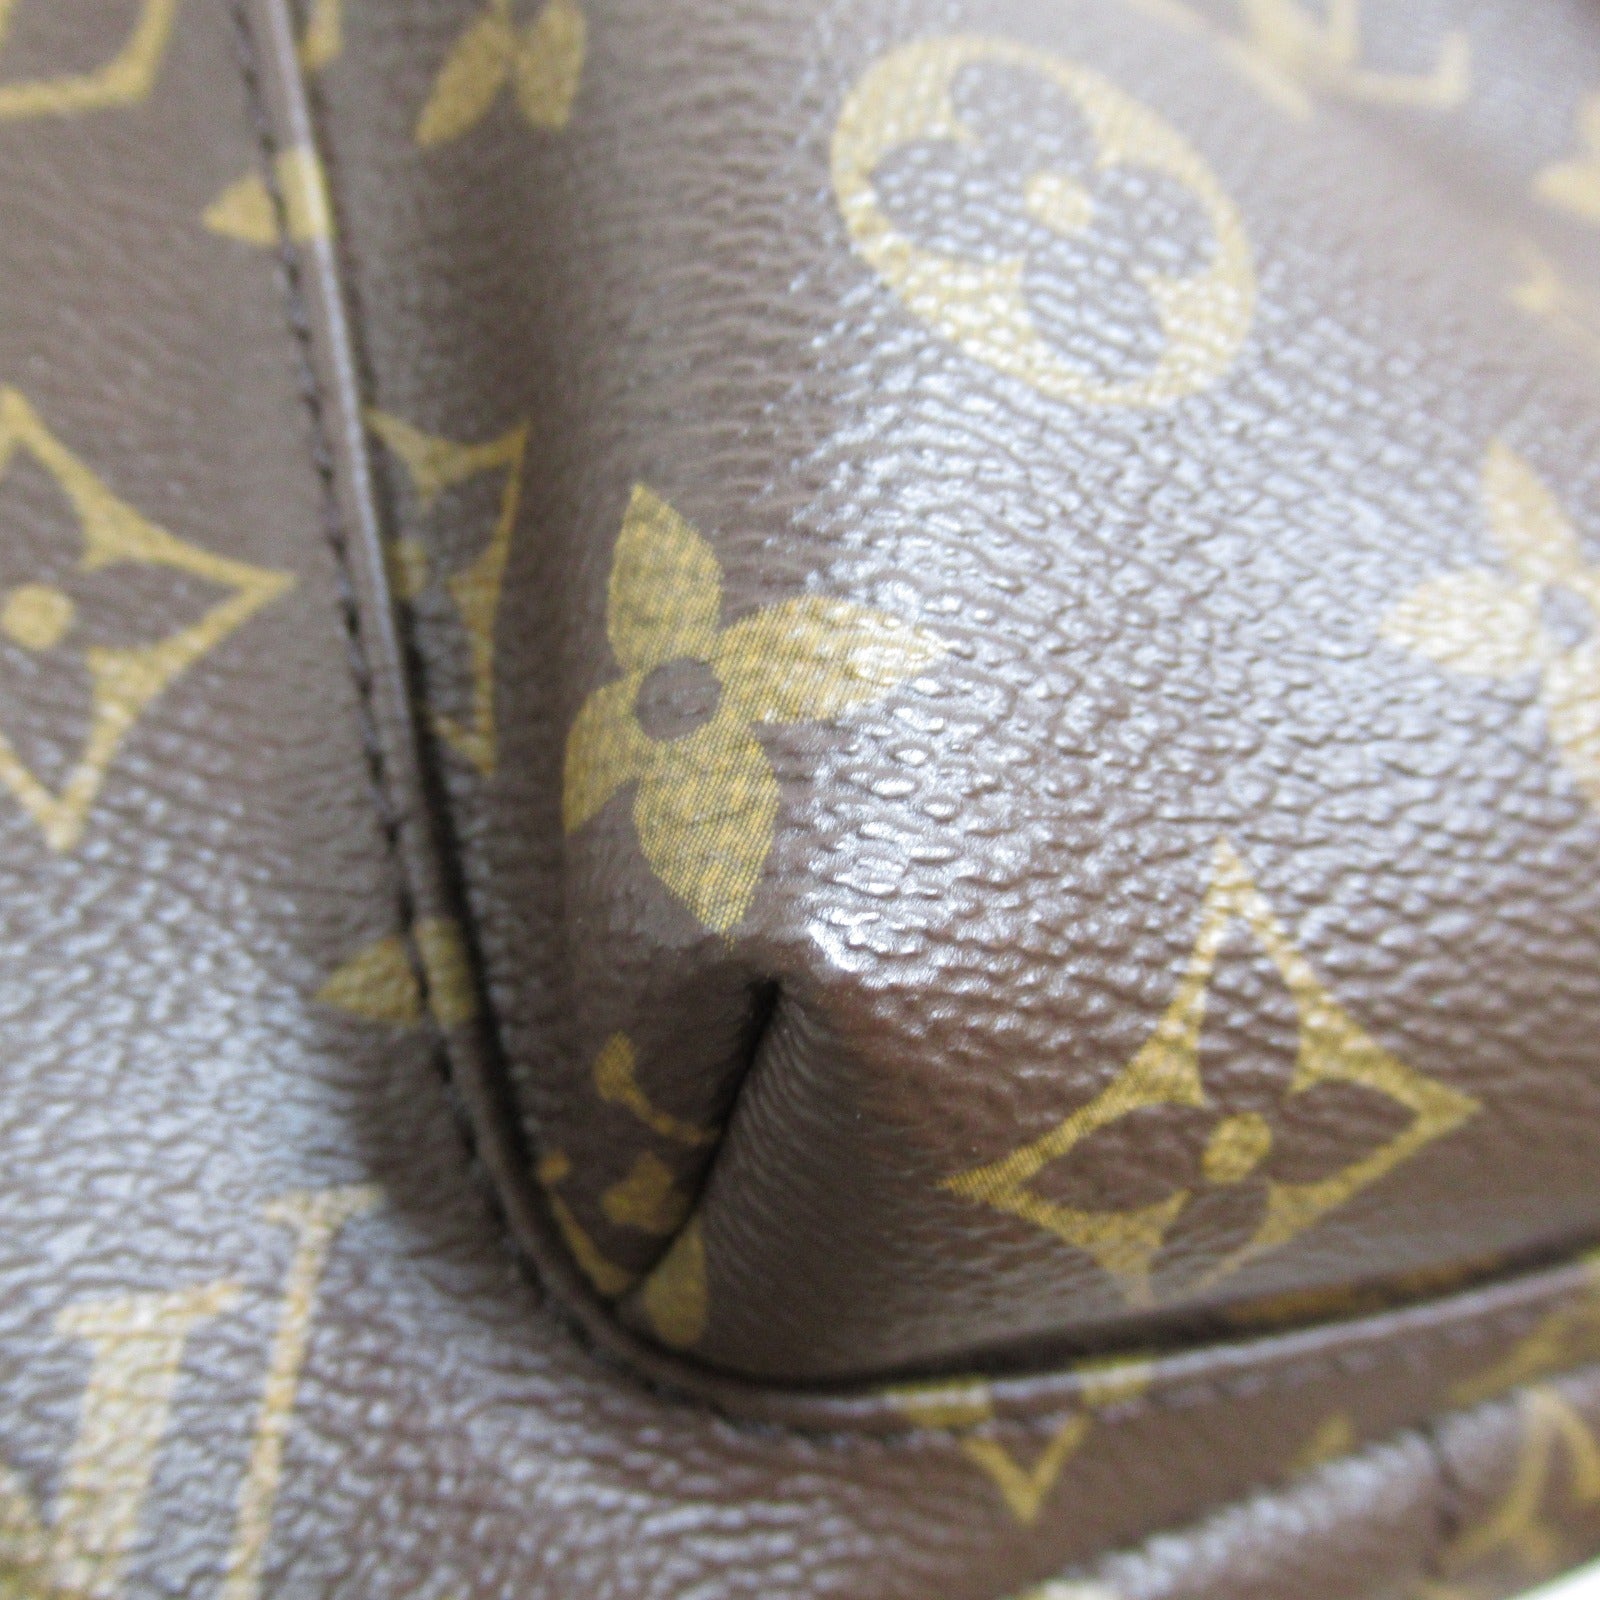 Louis Vuitton Louis Vuitton Palm Springs Backpack MM Rucksack Backpack Bag PVC Coated Canvas Monogram   Brown M44874